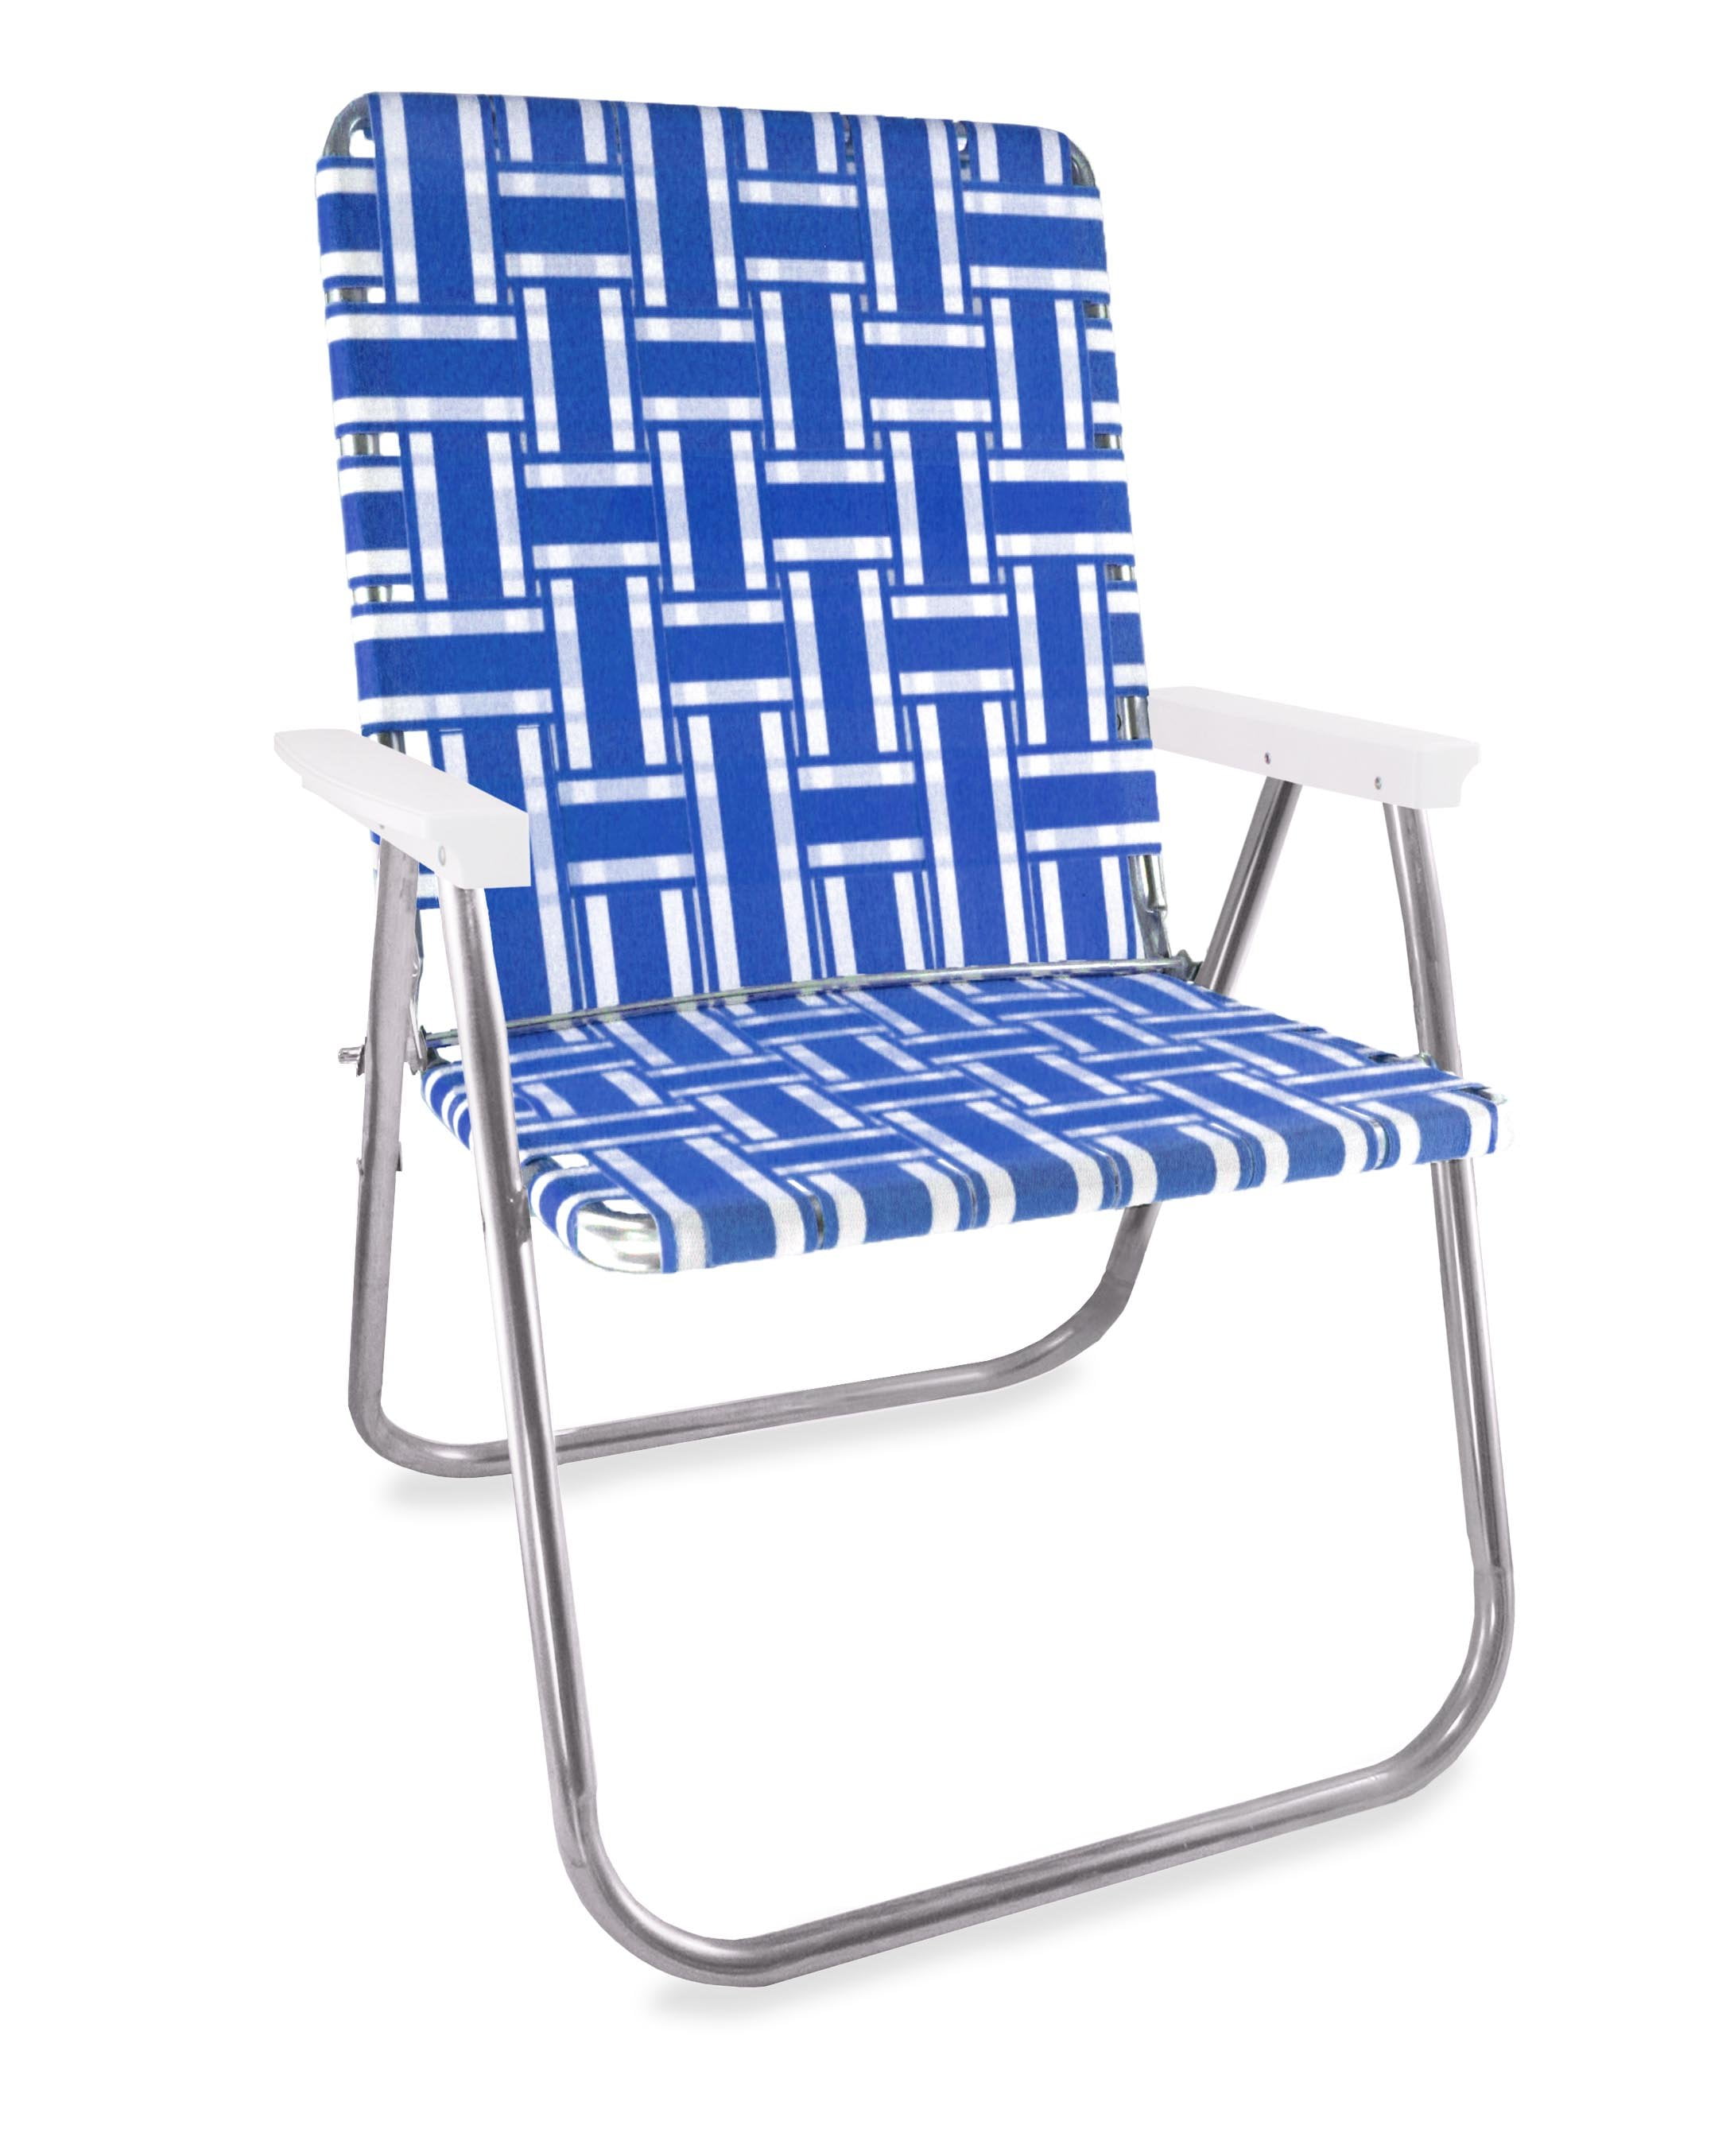 webbed folding aluminum lawn chairs